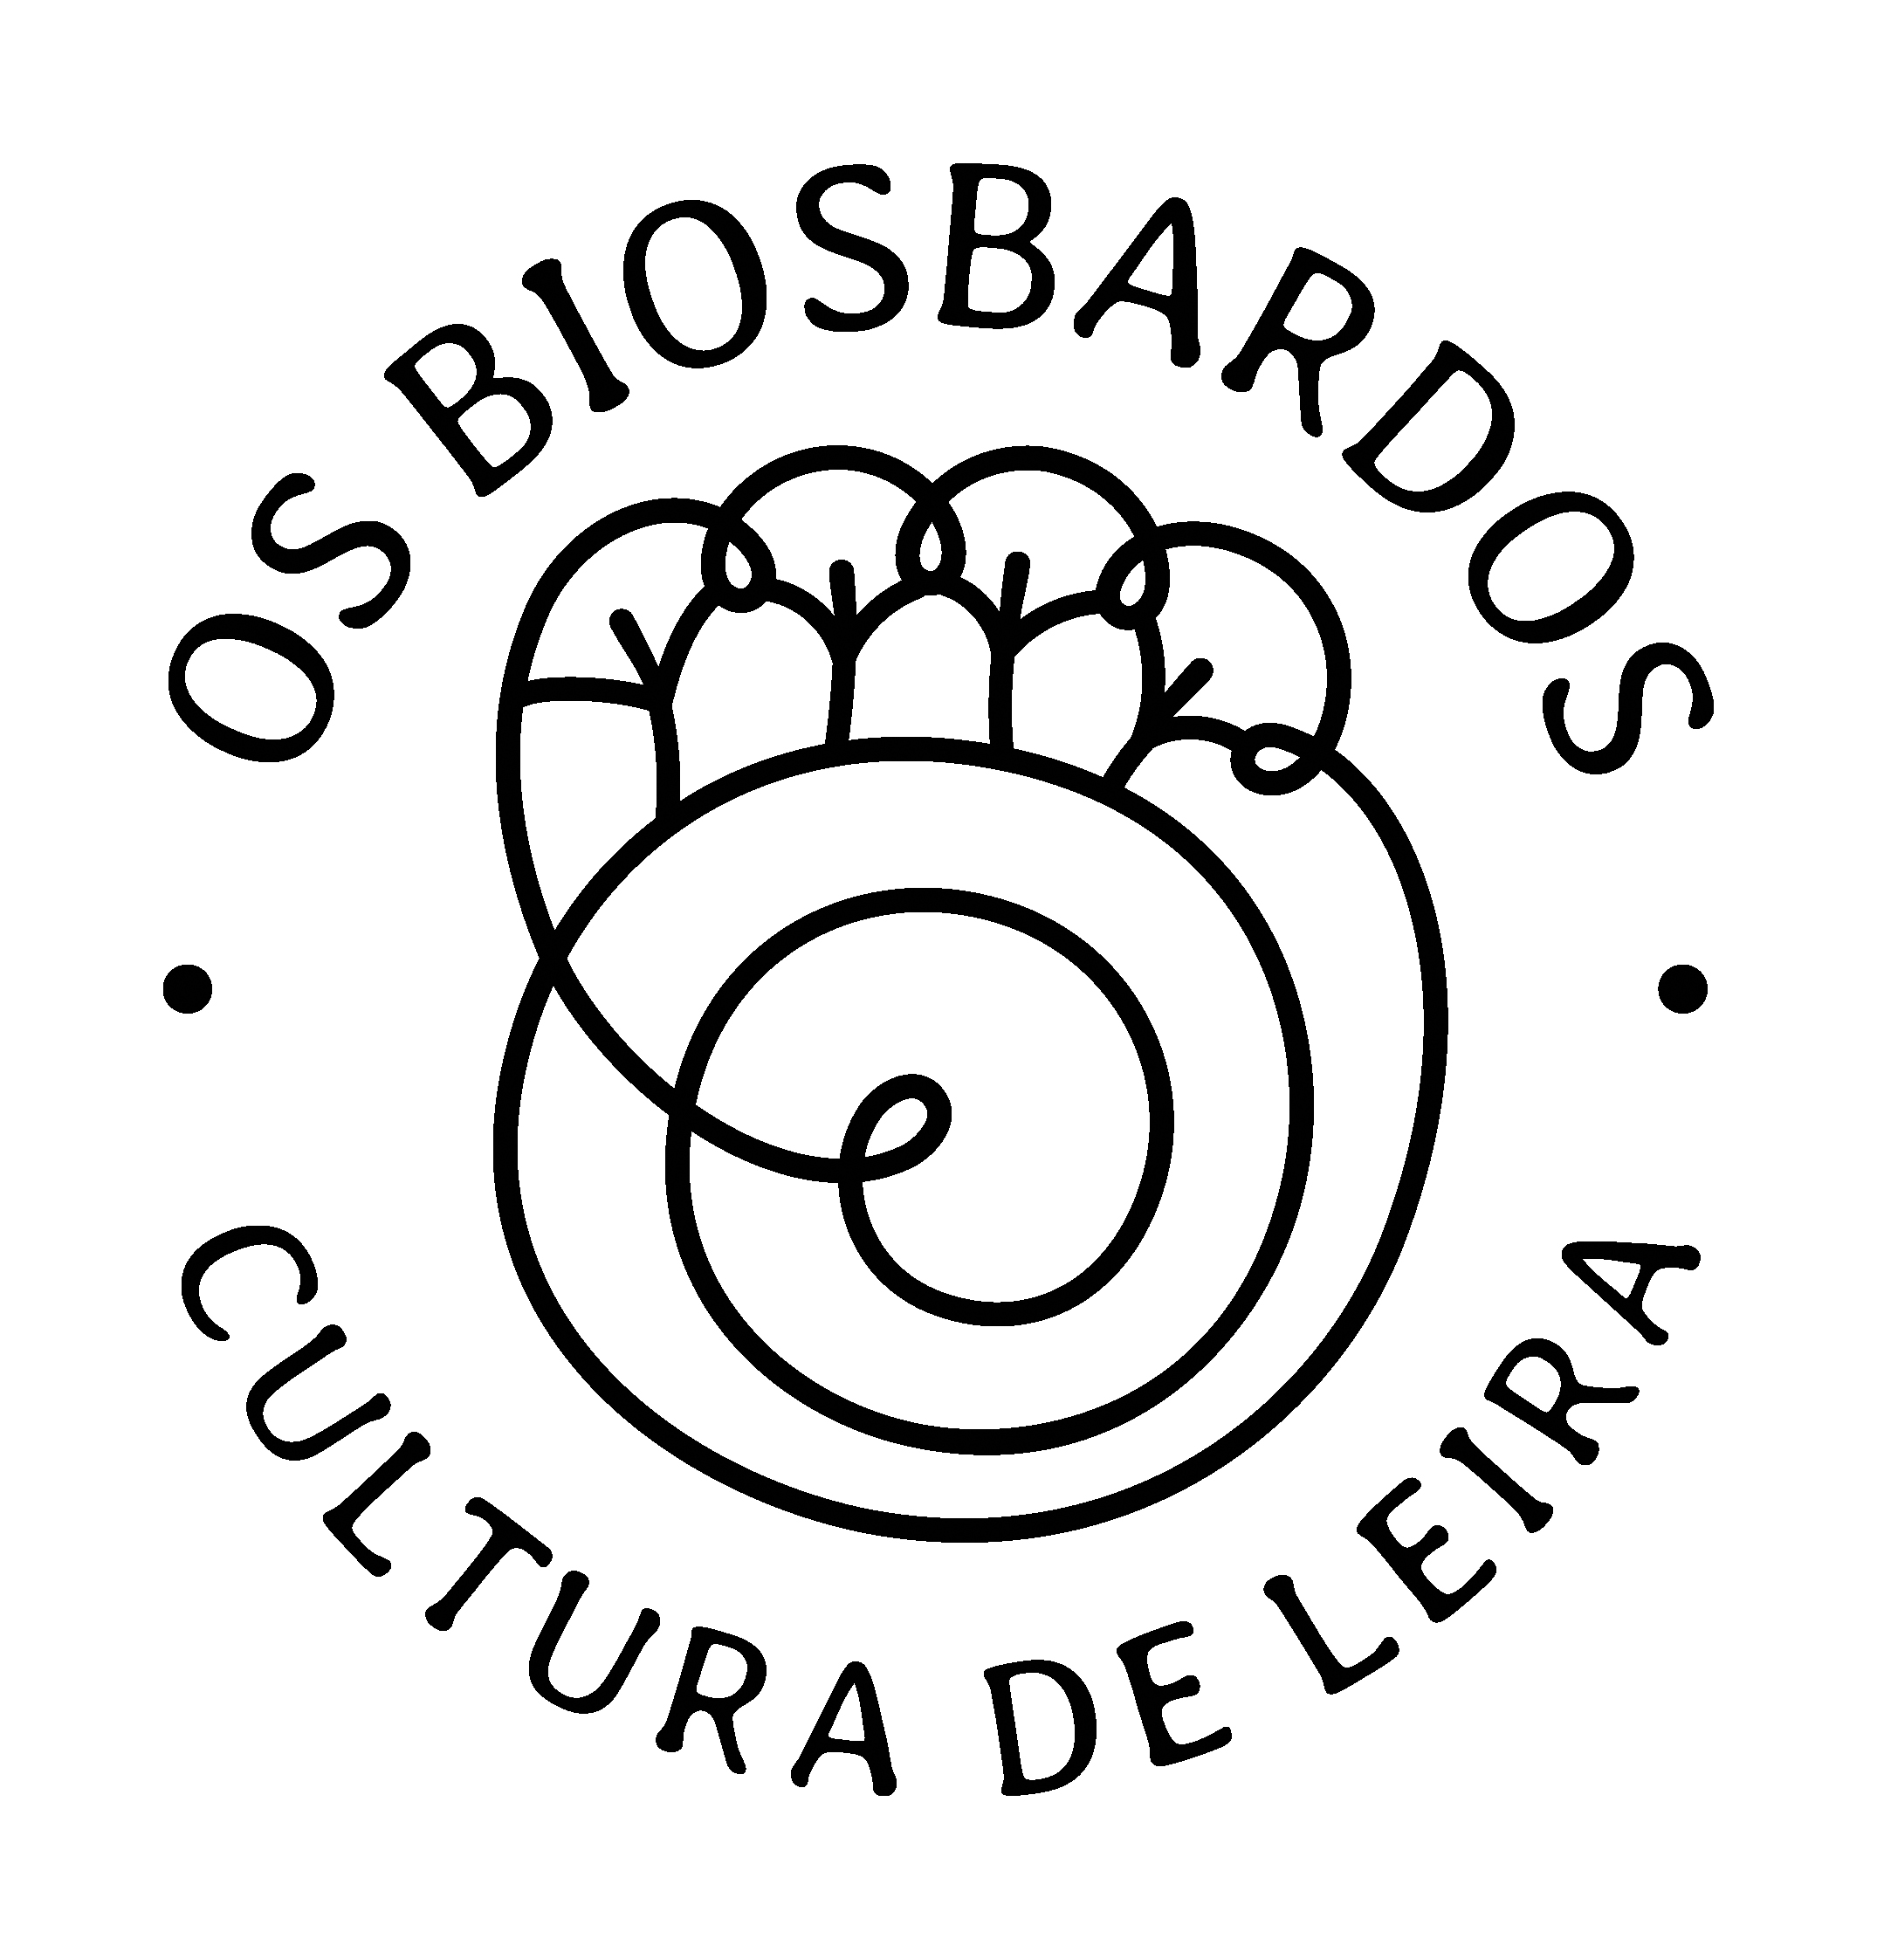 Os Biosbardos • Cultura de Leira